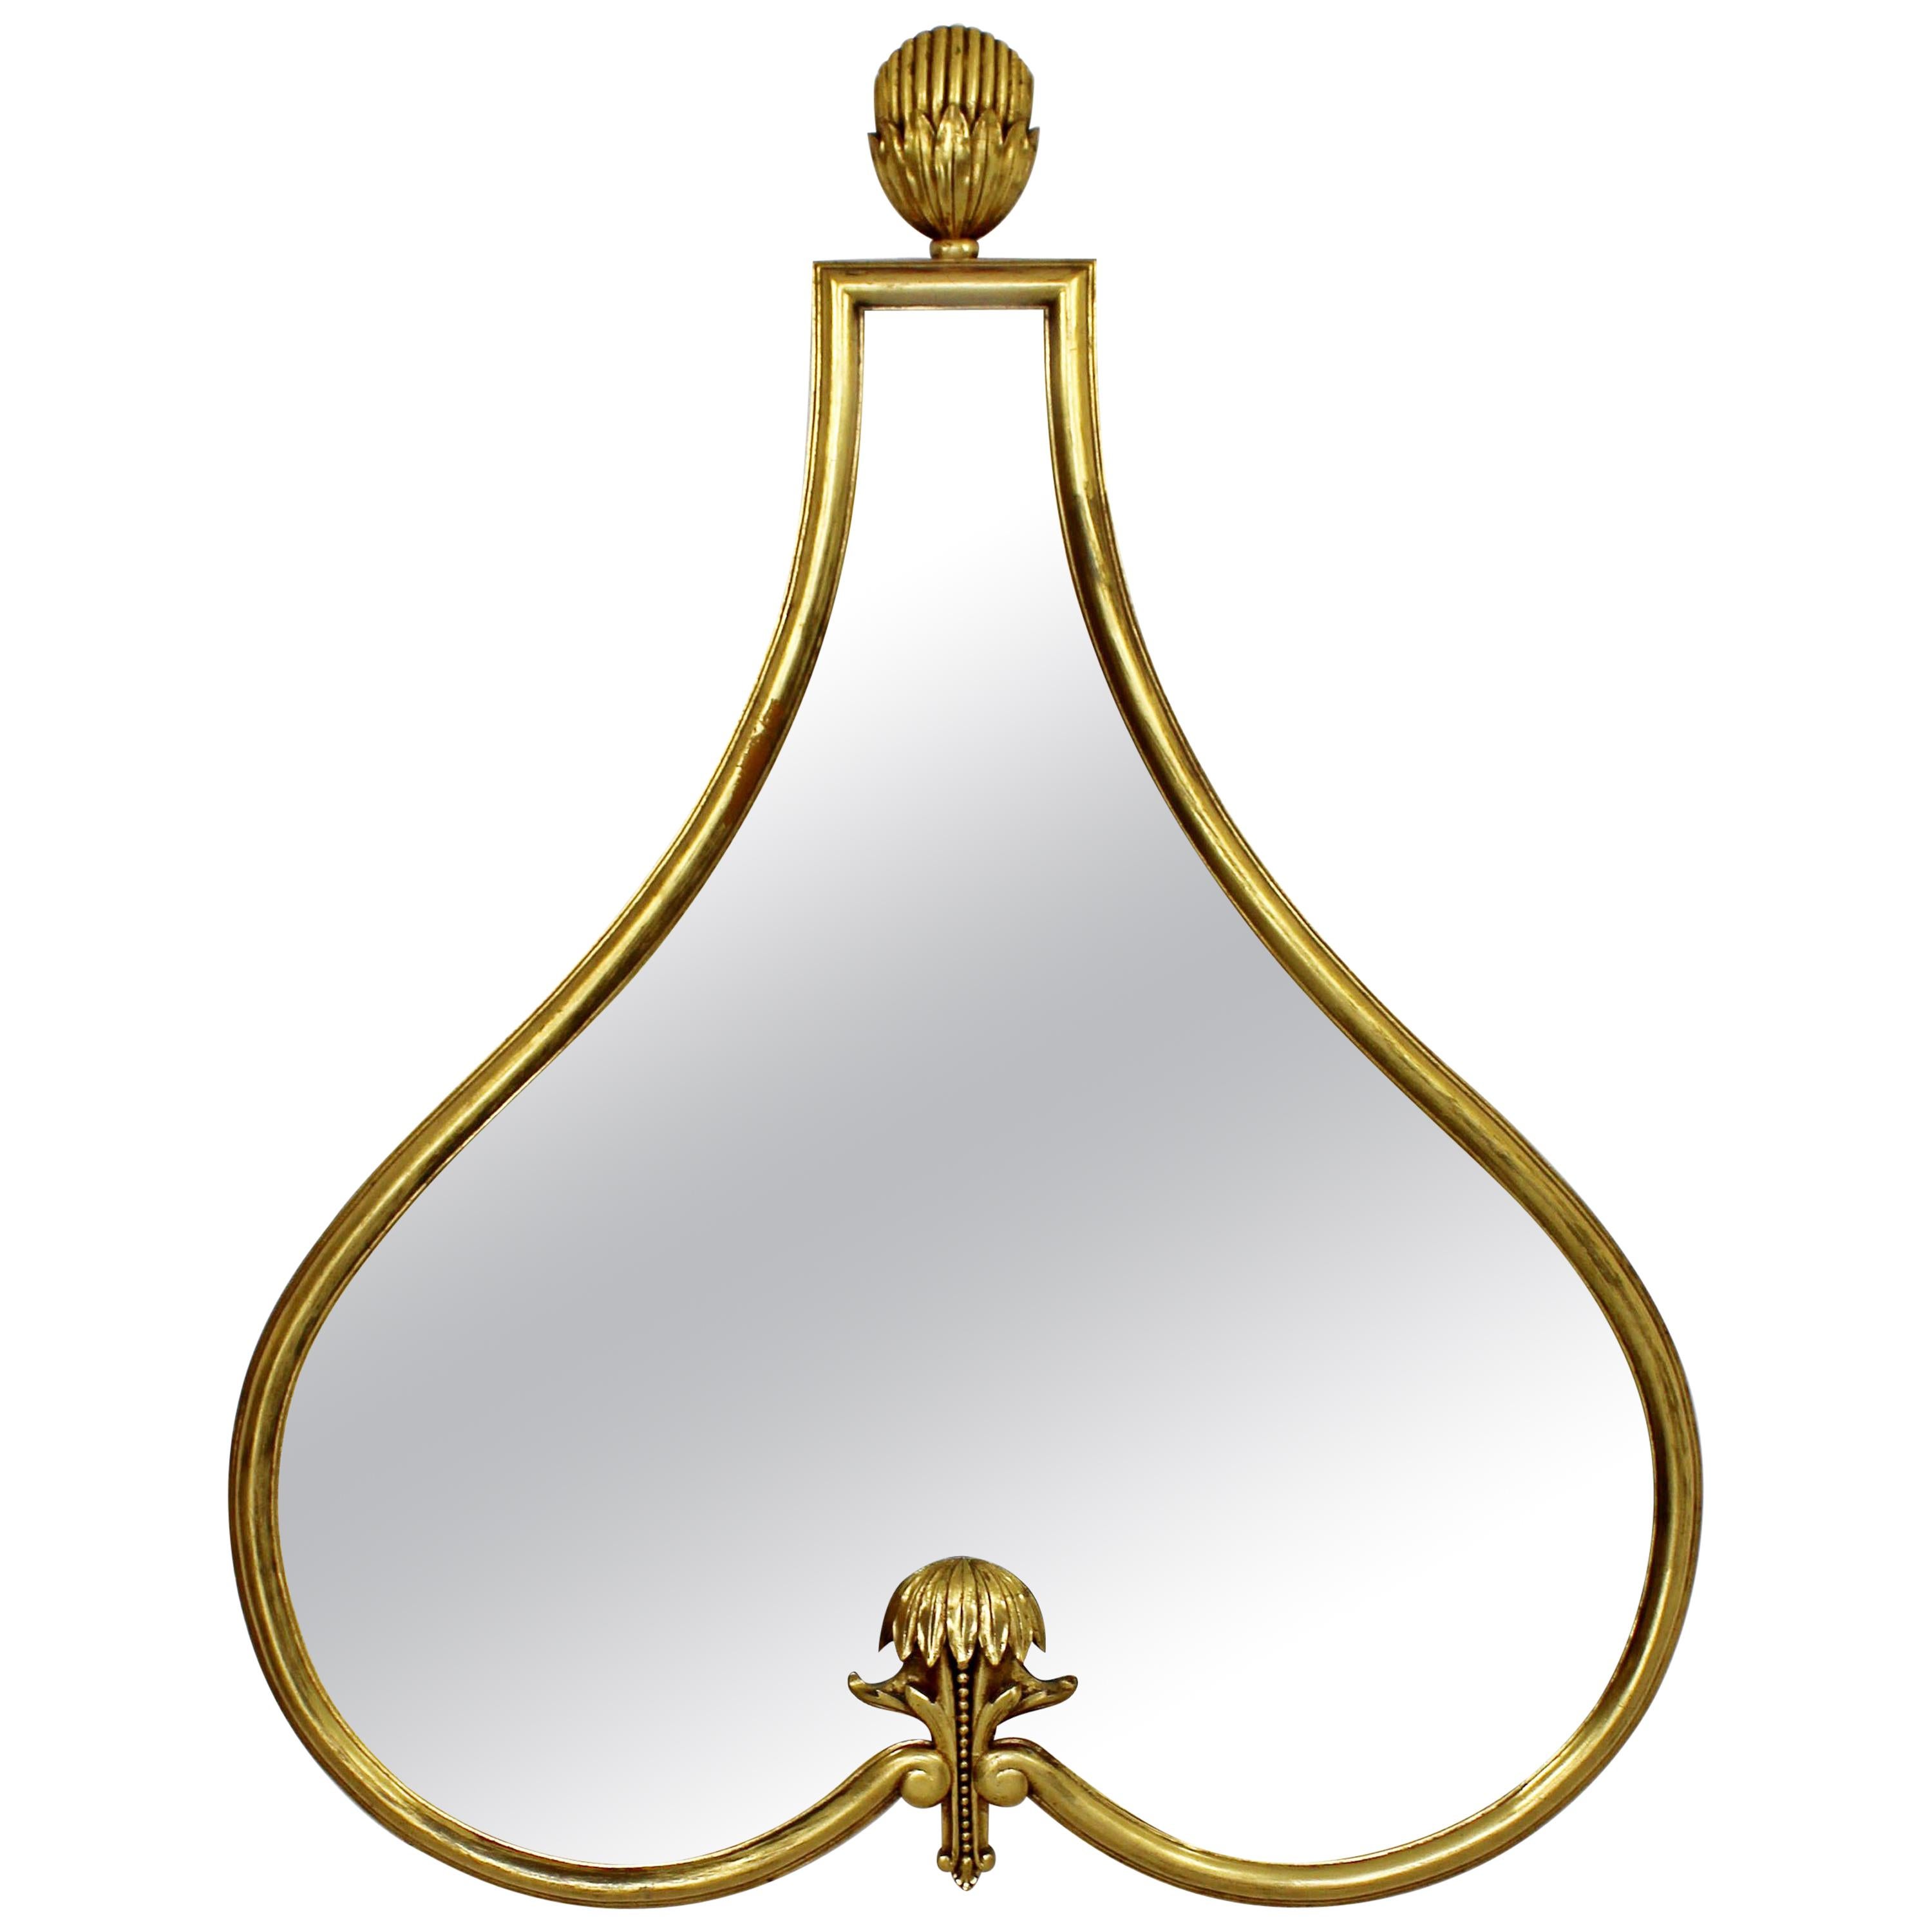 Antique Art Nouveau Hollywood Regency Gold Gilt Ornate Wall Mirror